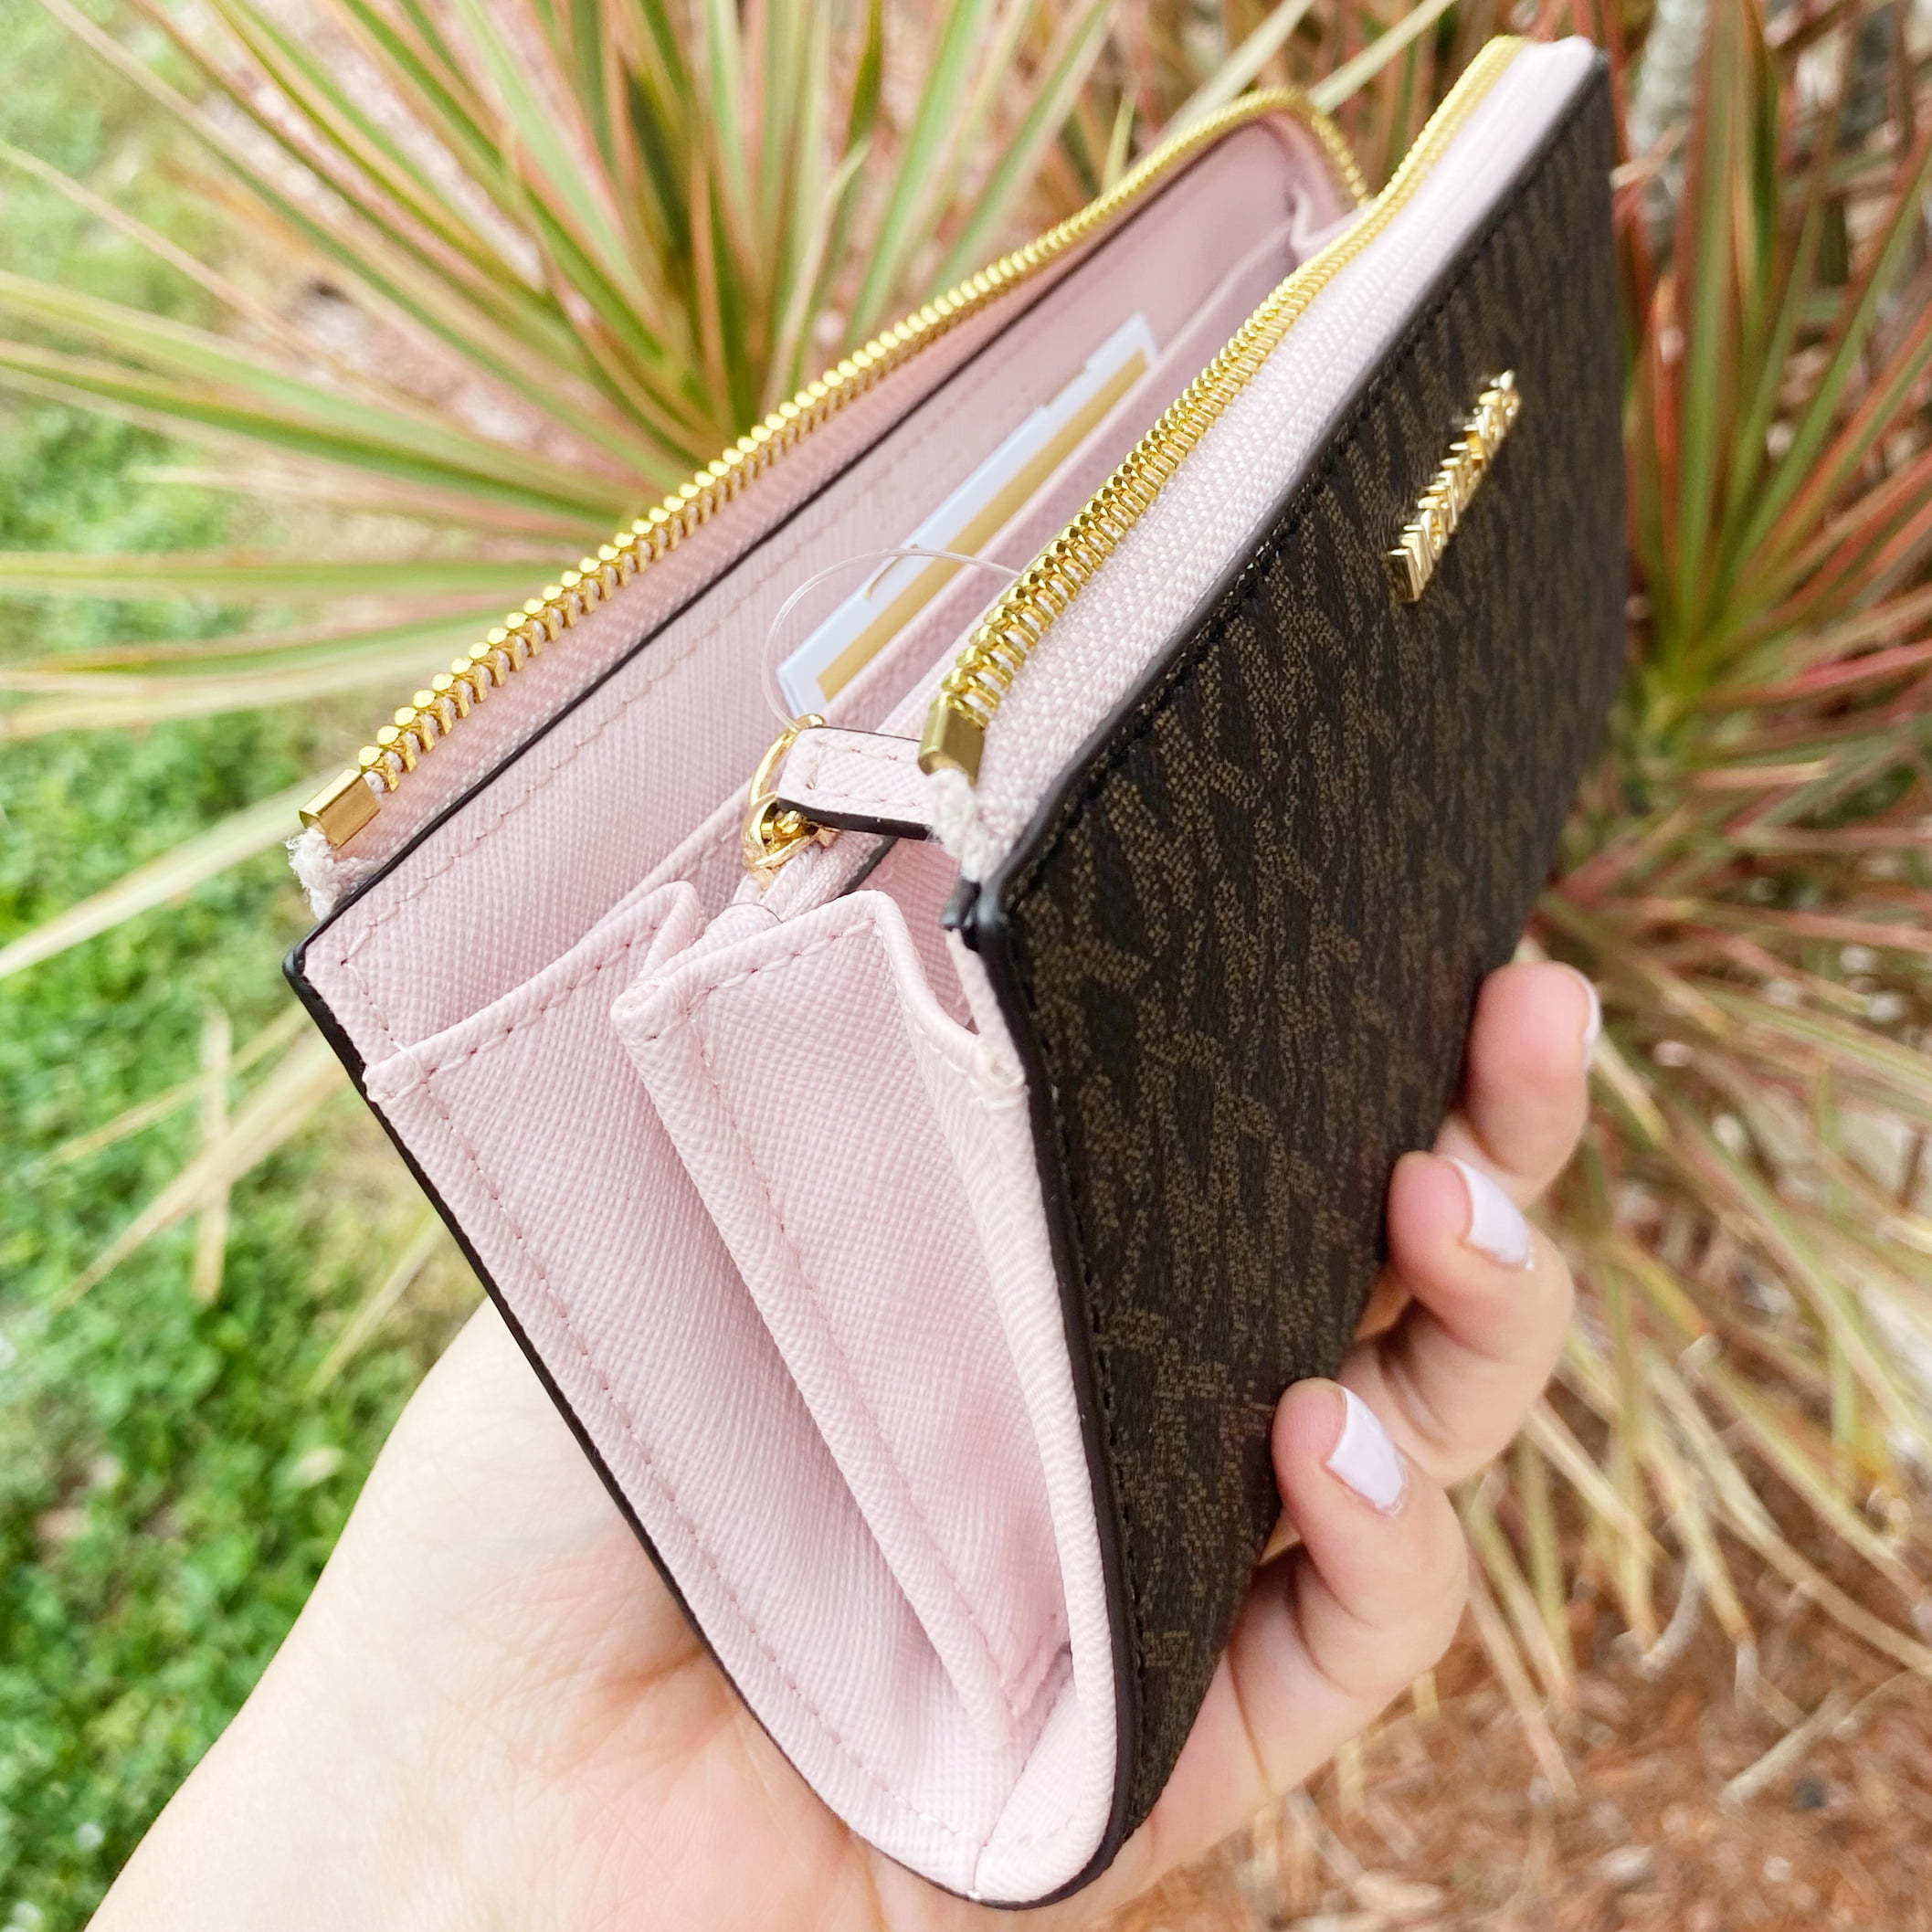 pink and brown michael kors wallet